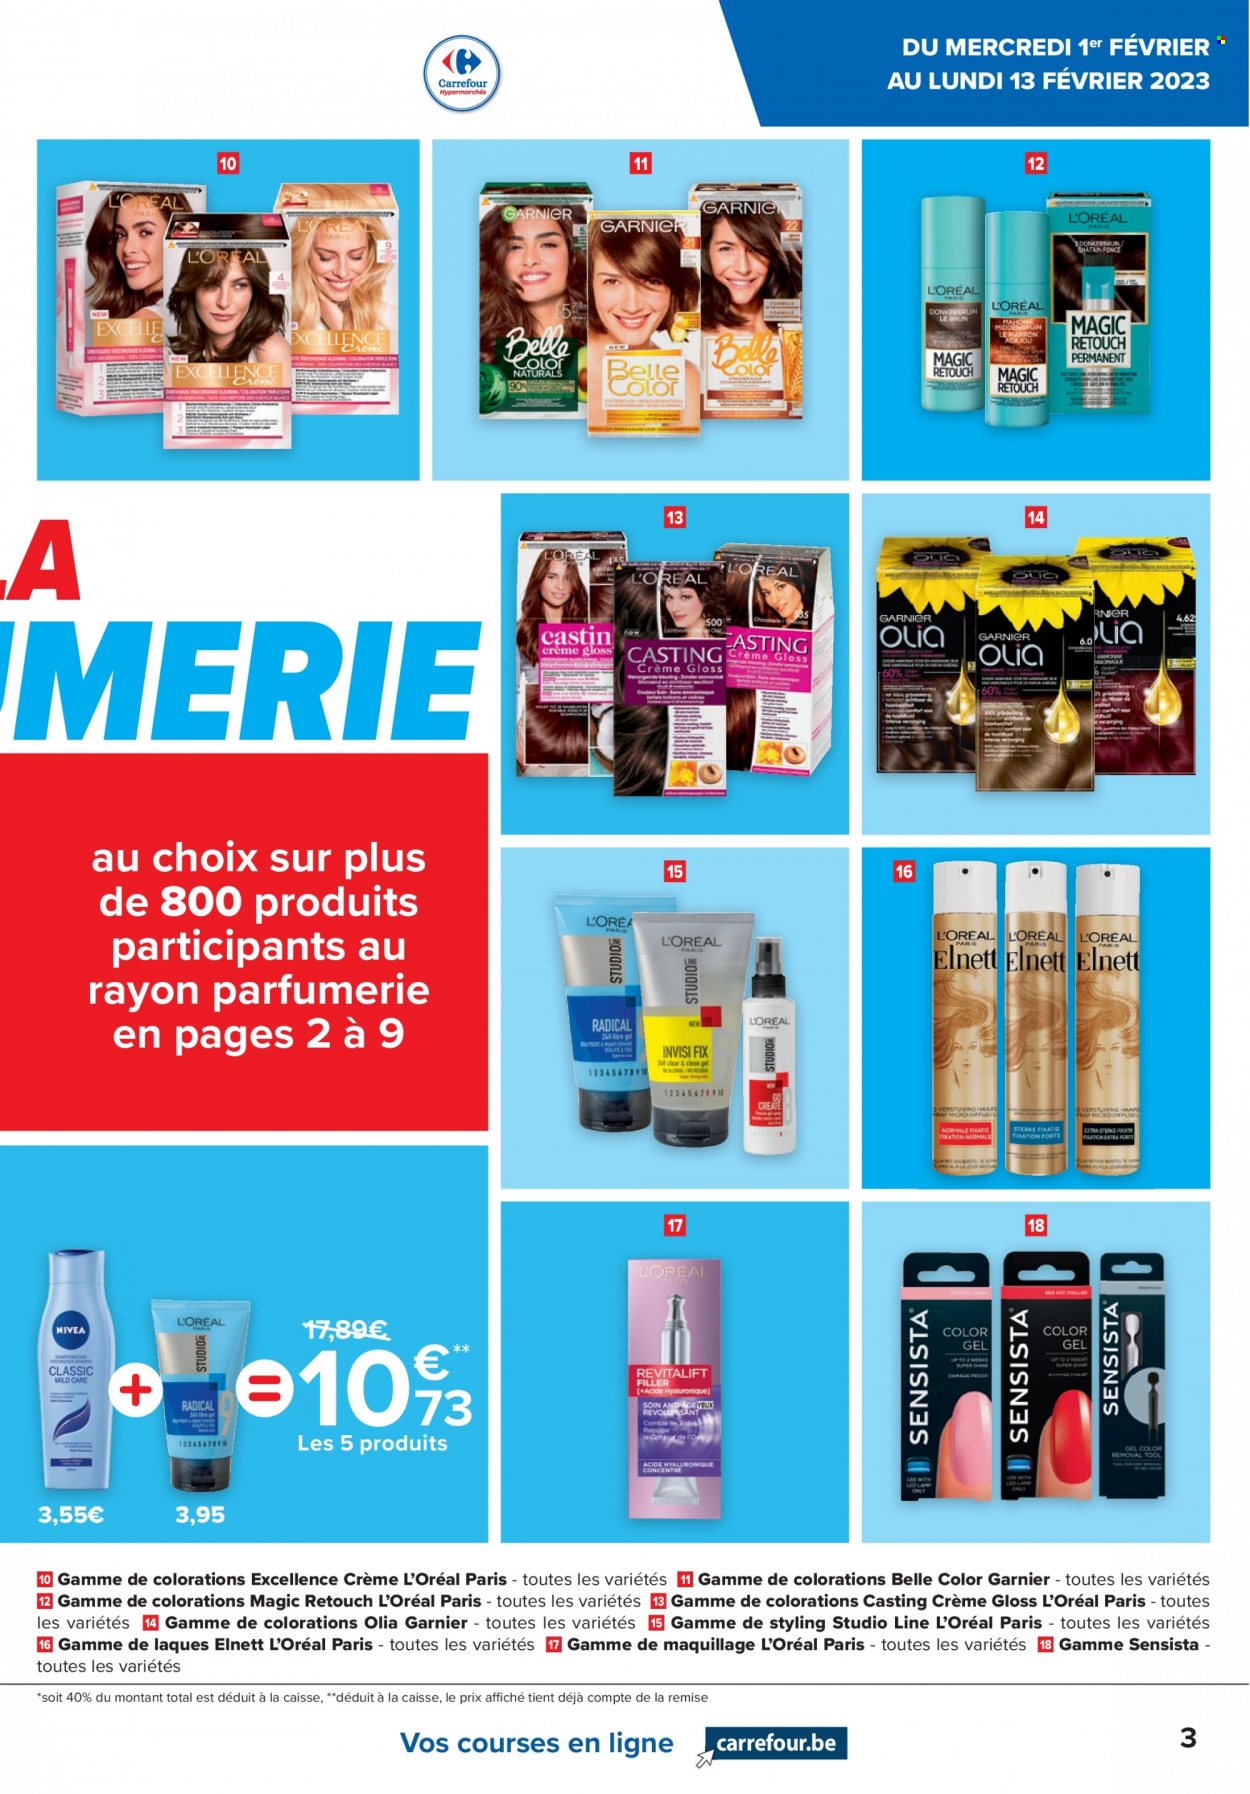 thumbnail - Carrefour hypermarkt-aanbieding - 01/02/2023 - 13/02/2023 -  producten in de aanbieding - L’oréal, Garnier, crème, styling. Pagina 3.